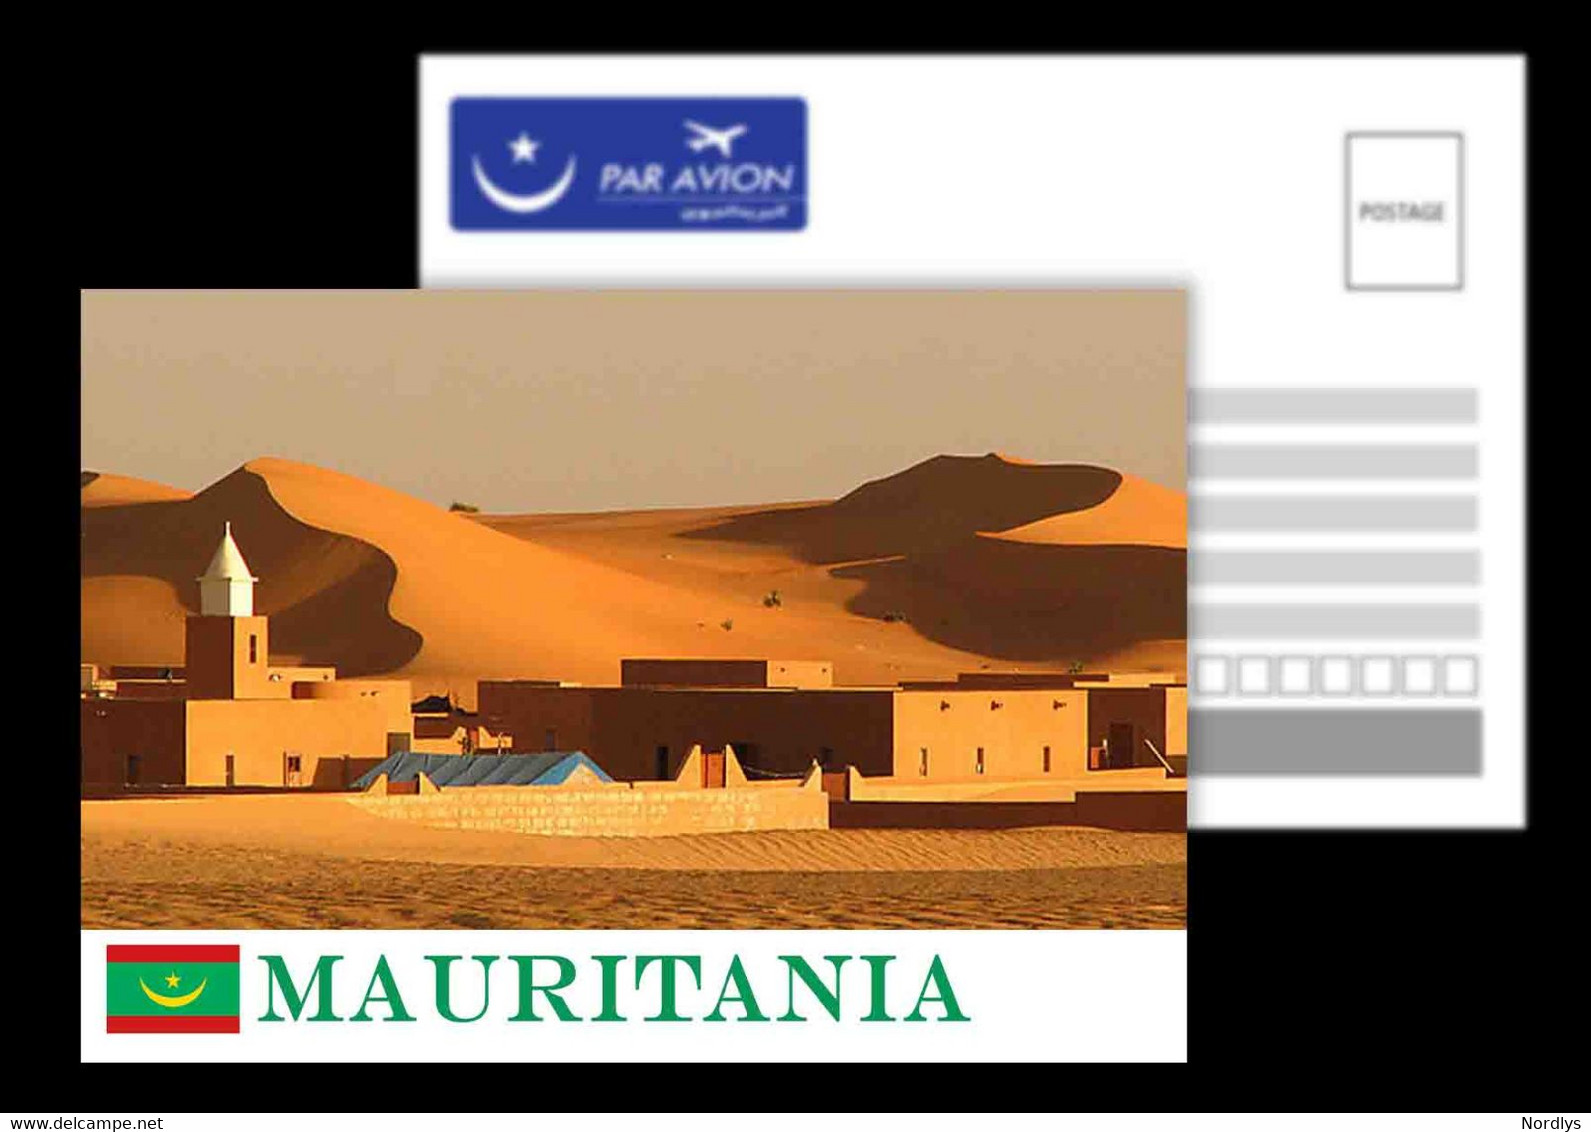 Mauritania / Postcard /View Card - Mauritania